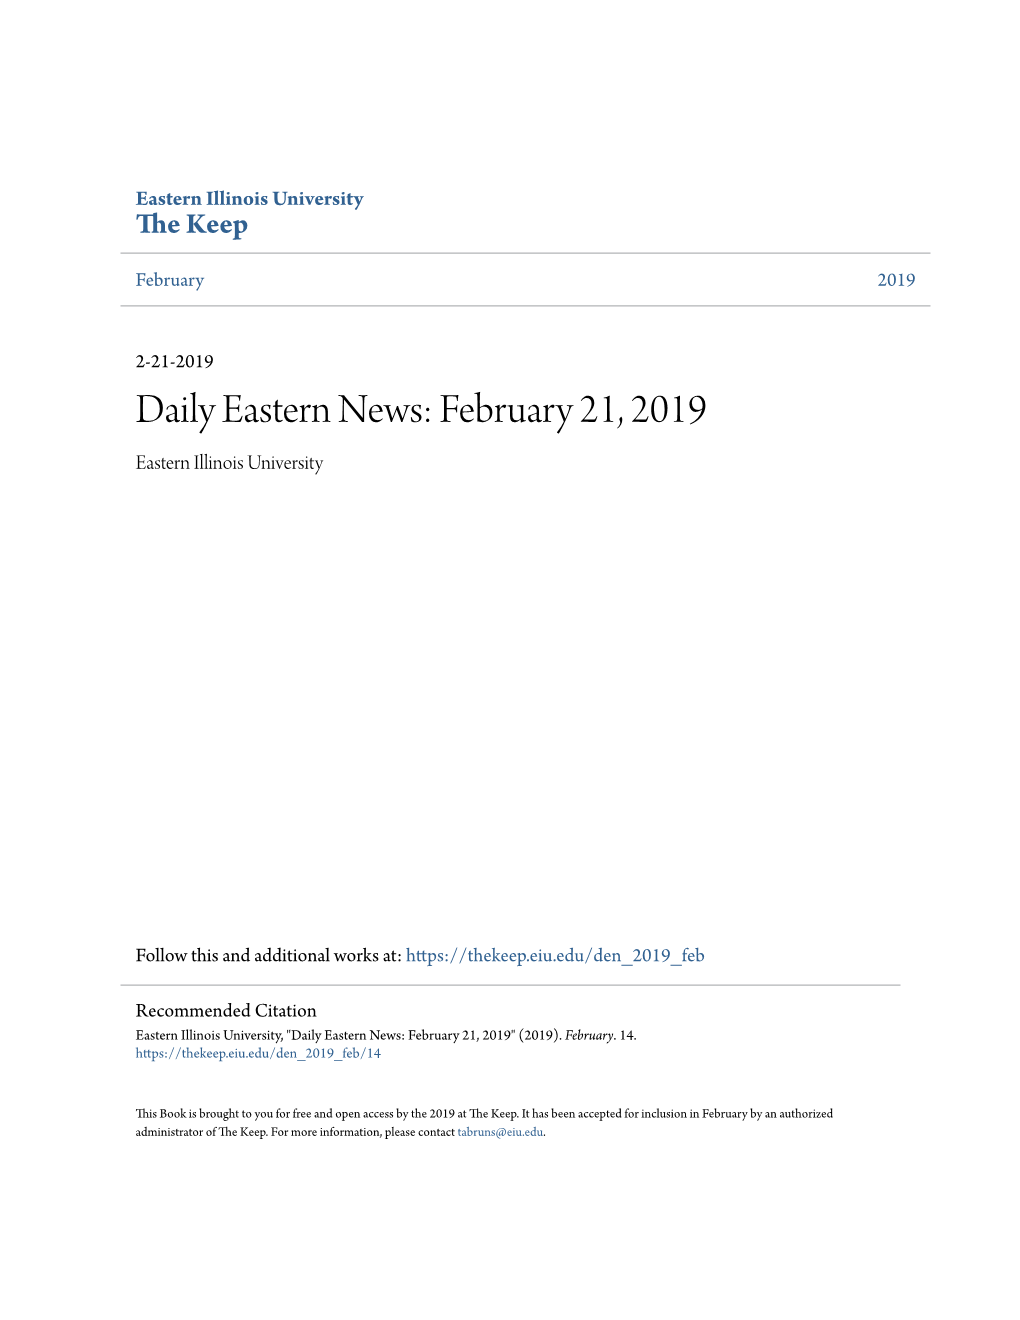 Daily Eastern News: February 21, 2019 Eastern Illinois University